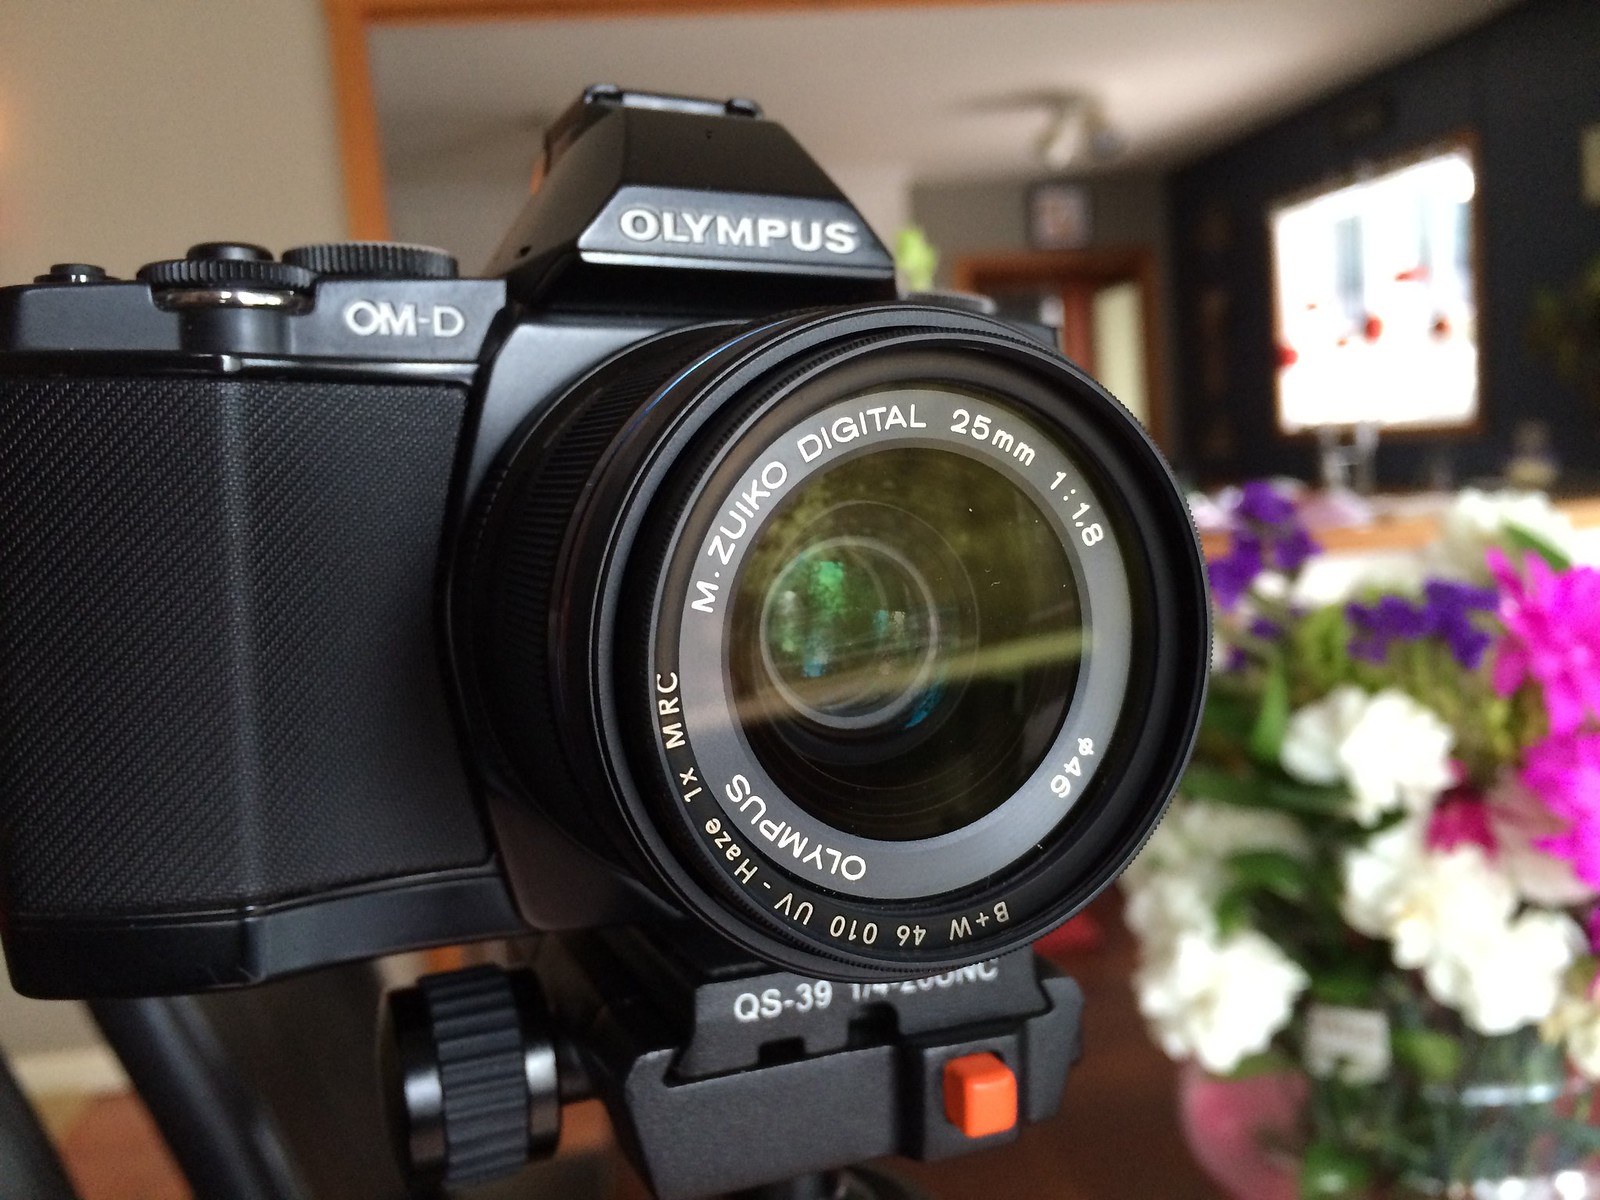 Olympus OM-D E-M5 with Olympus 25mm f1.8 Lens